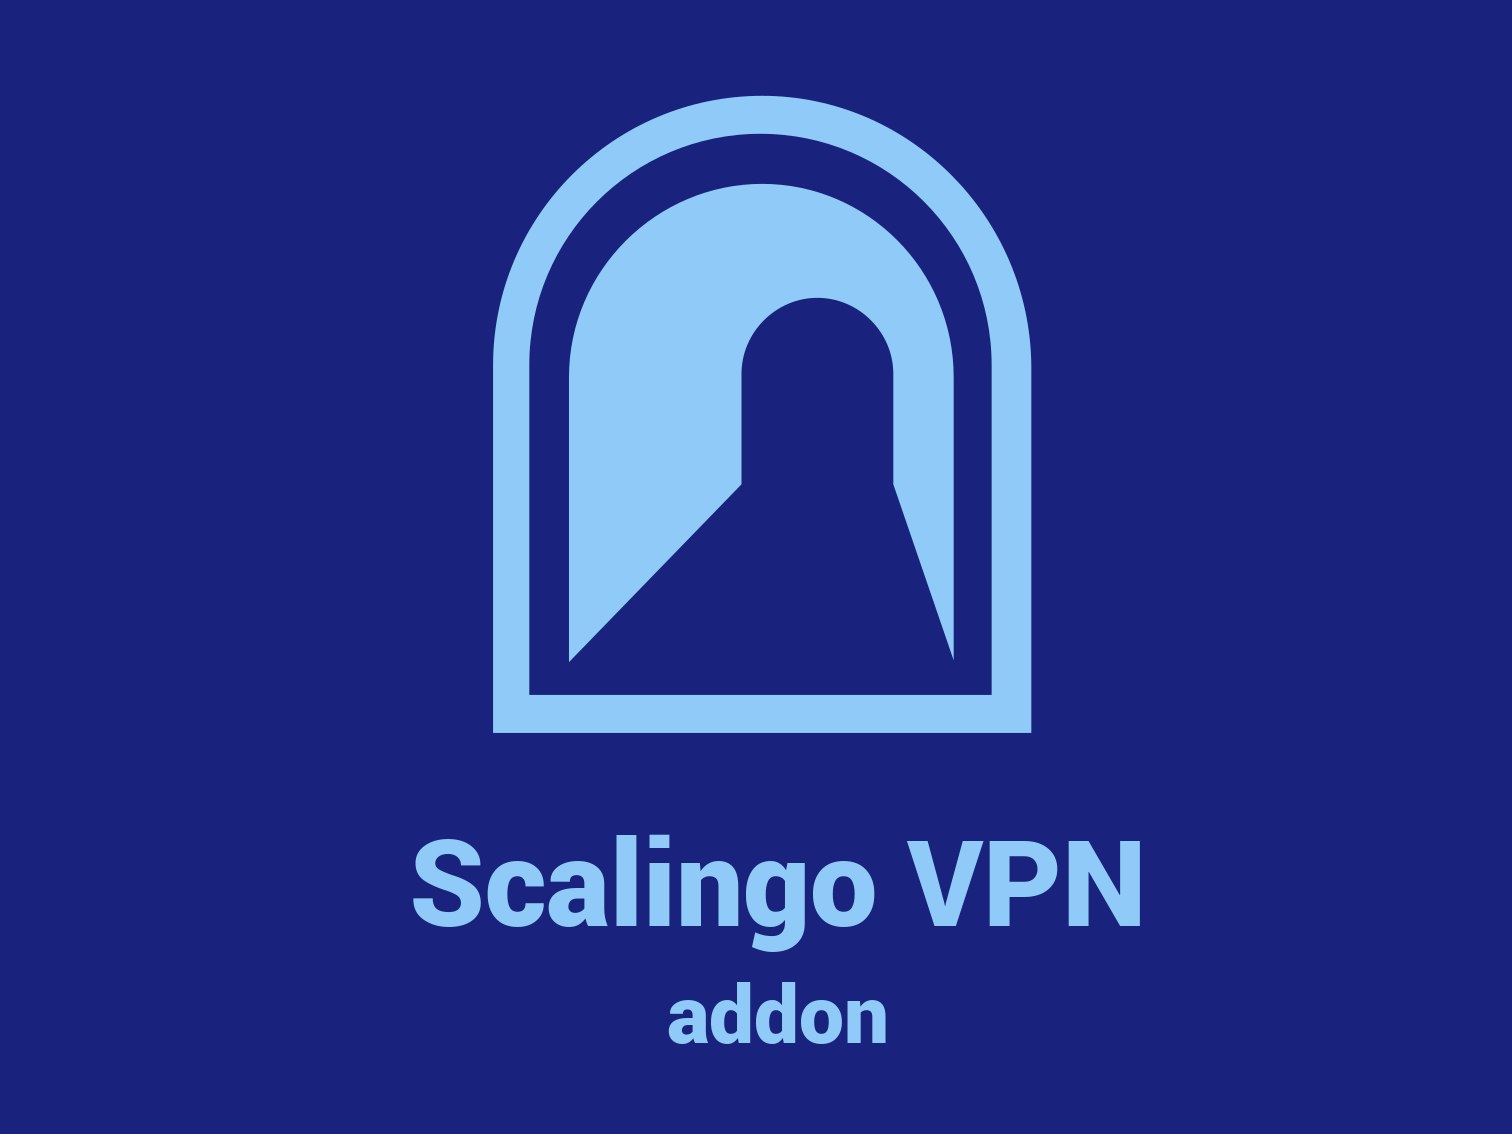 Scalingo VPN addon logo